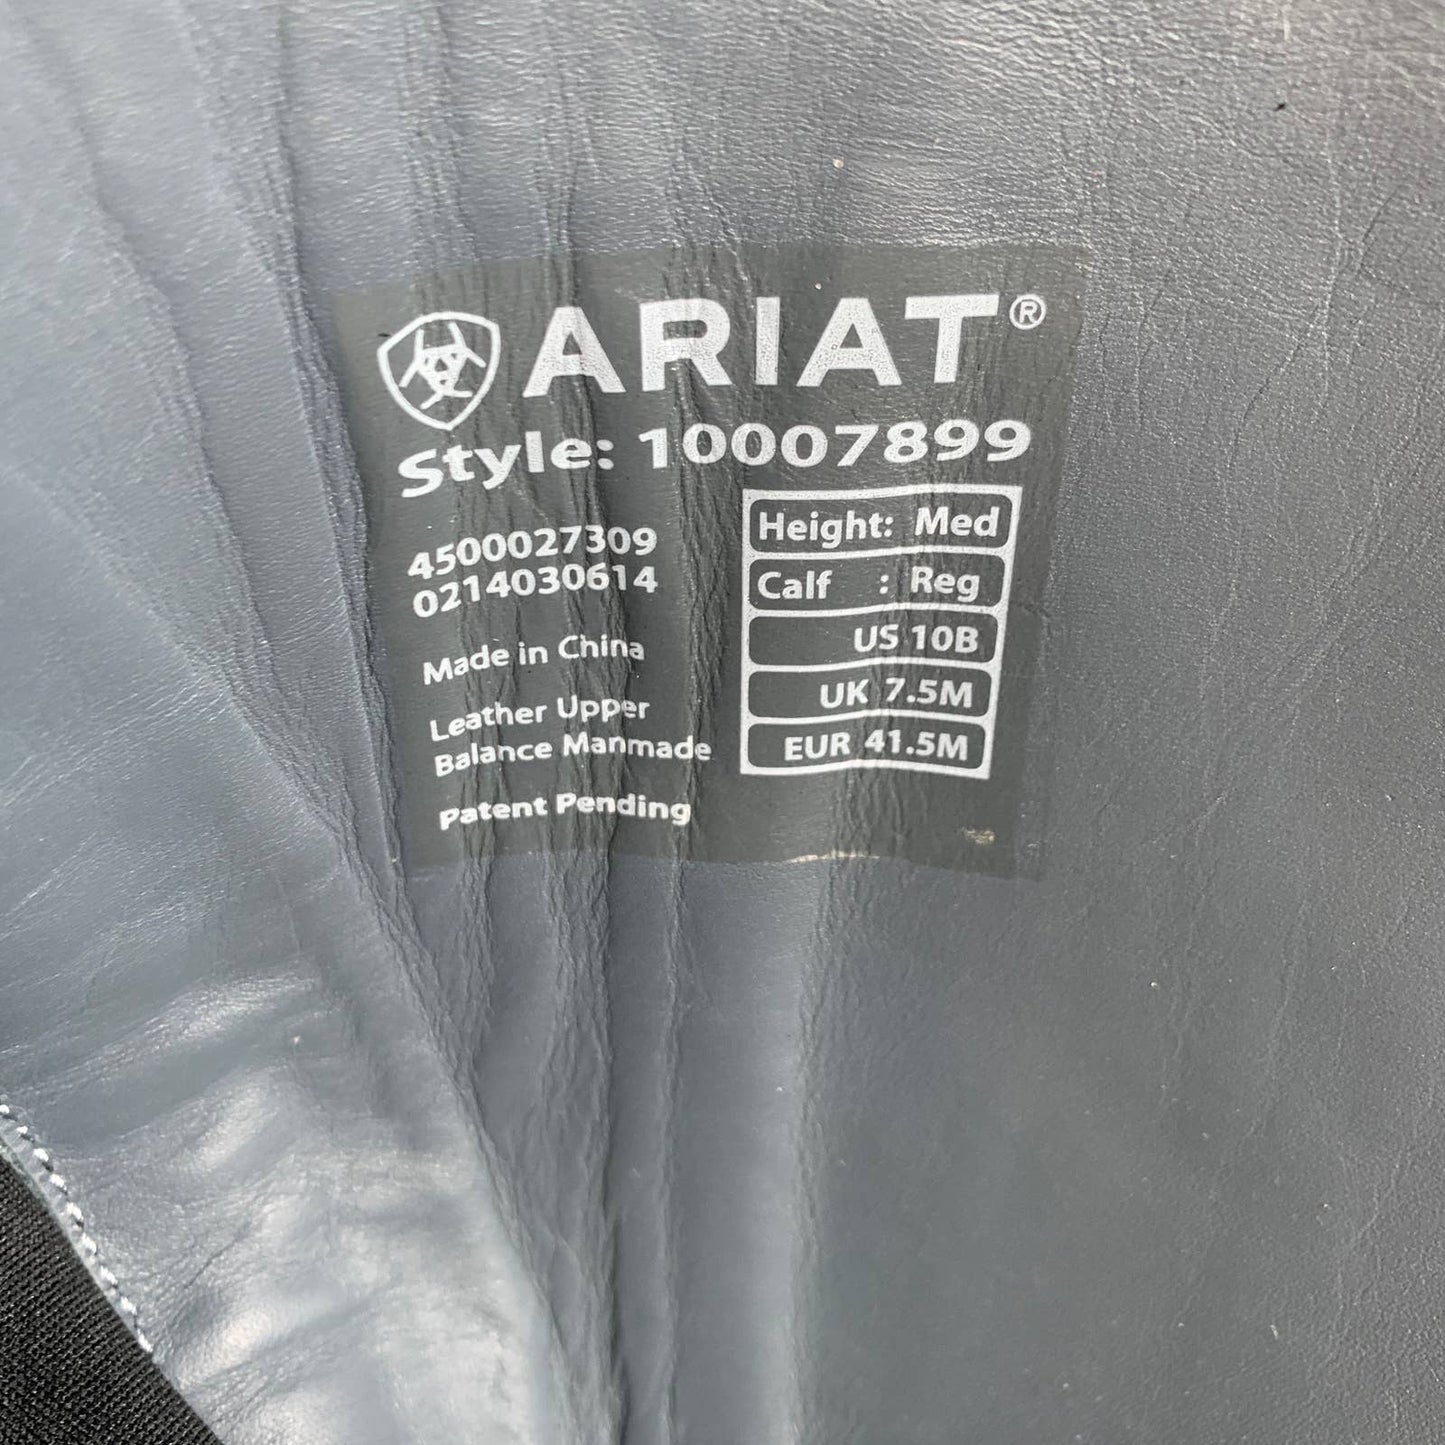 Ariat 'Volant' Dress Boots in Black - 10B Reg Calf